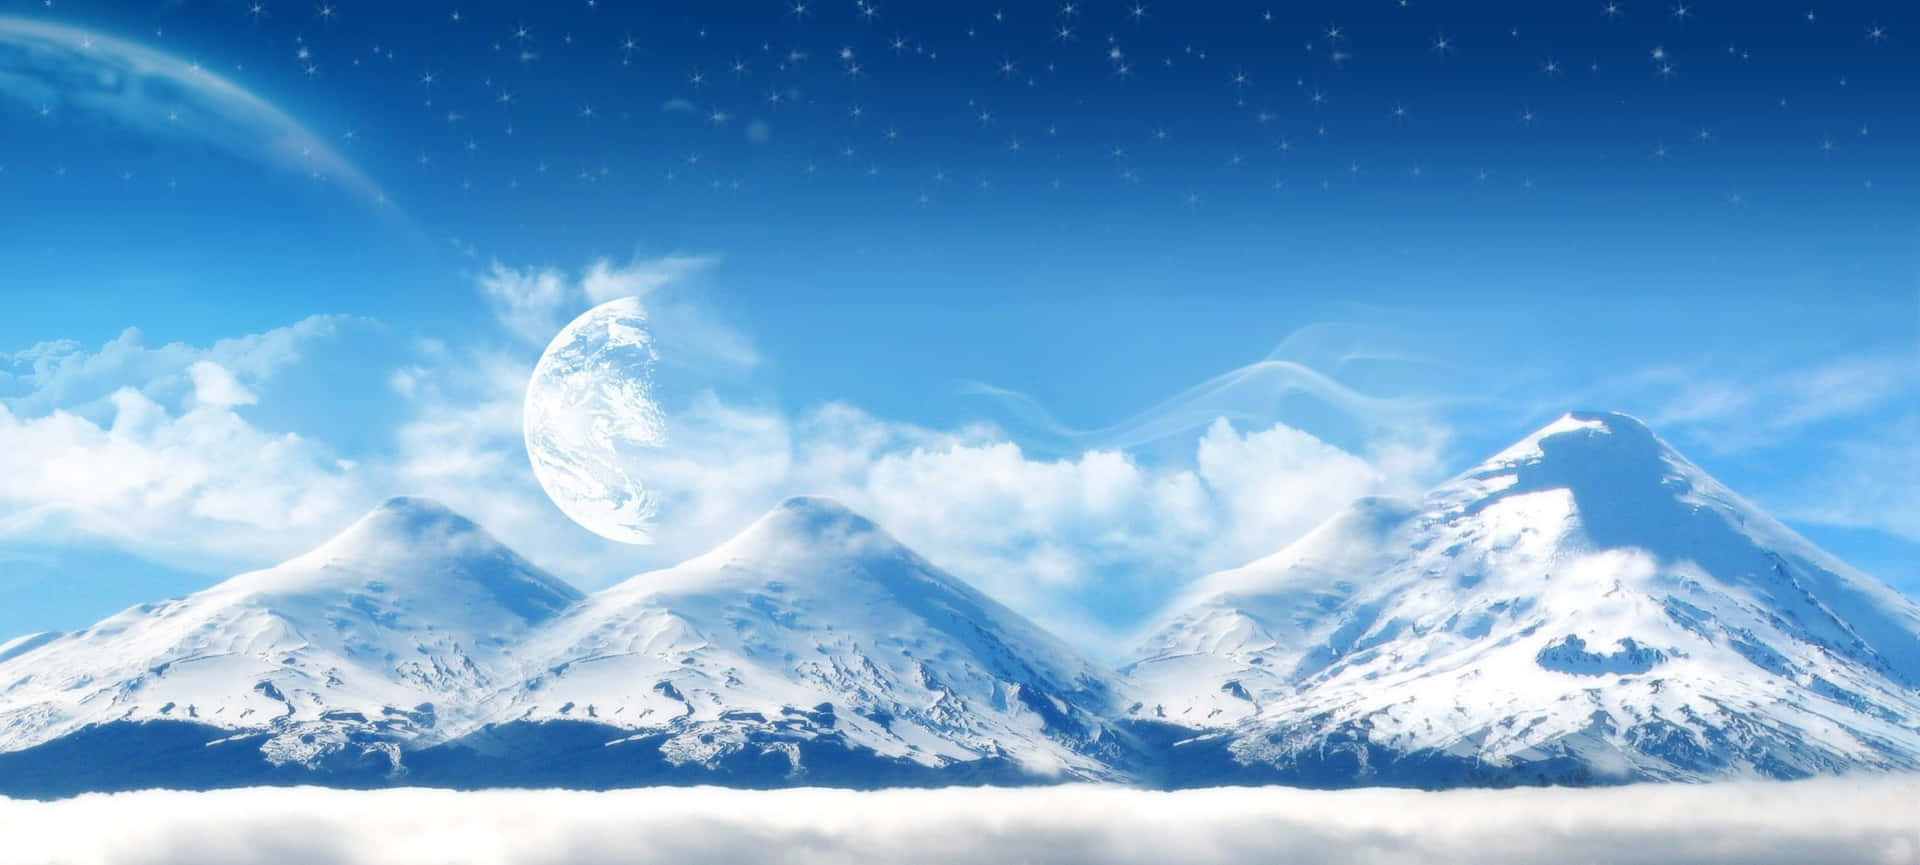 Coolemonitor Schneebedeckte Berge Wallpaper